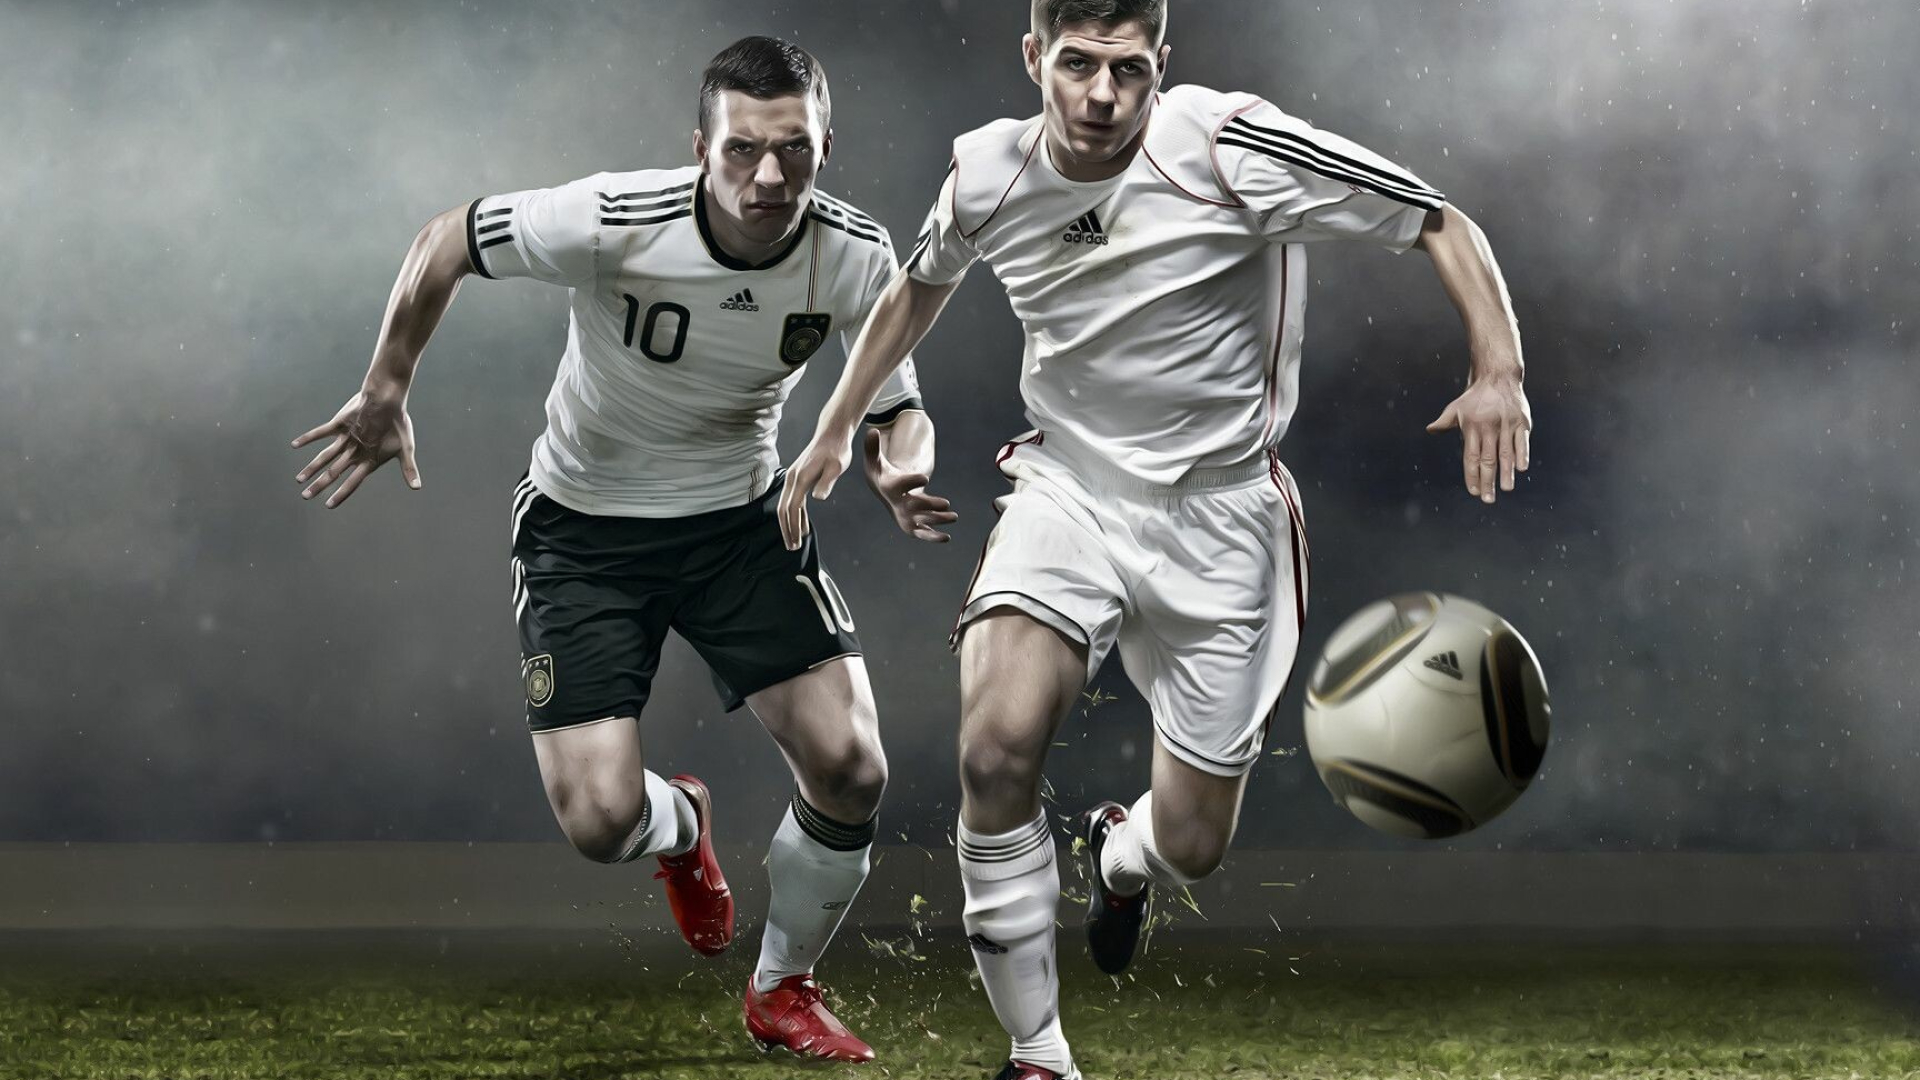 Adidas soccer spirit, Soccer style, Stylish soccer vibes, Iconic soccer visuals, 1920x1080 Full HD Desktop